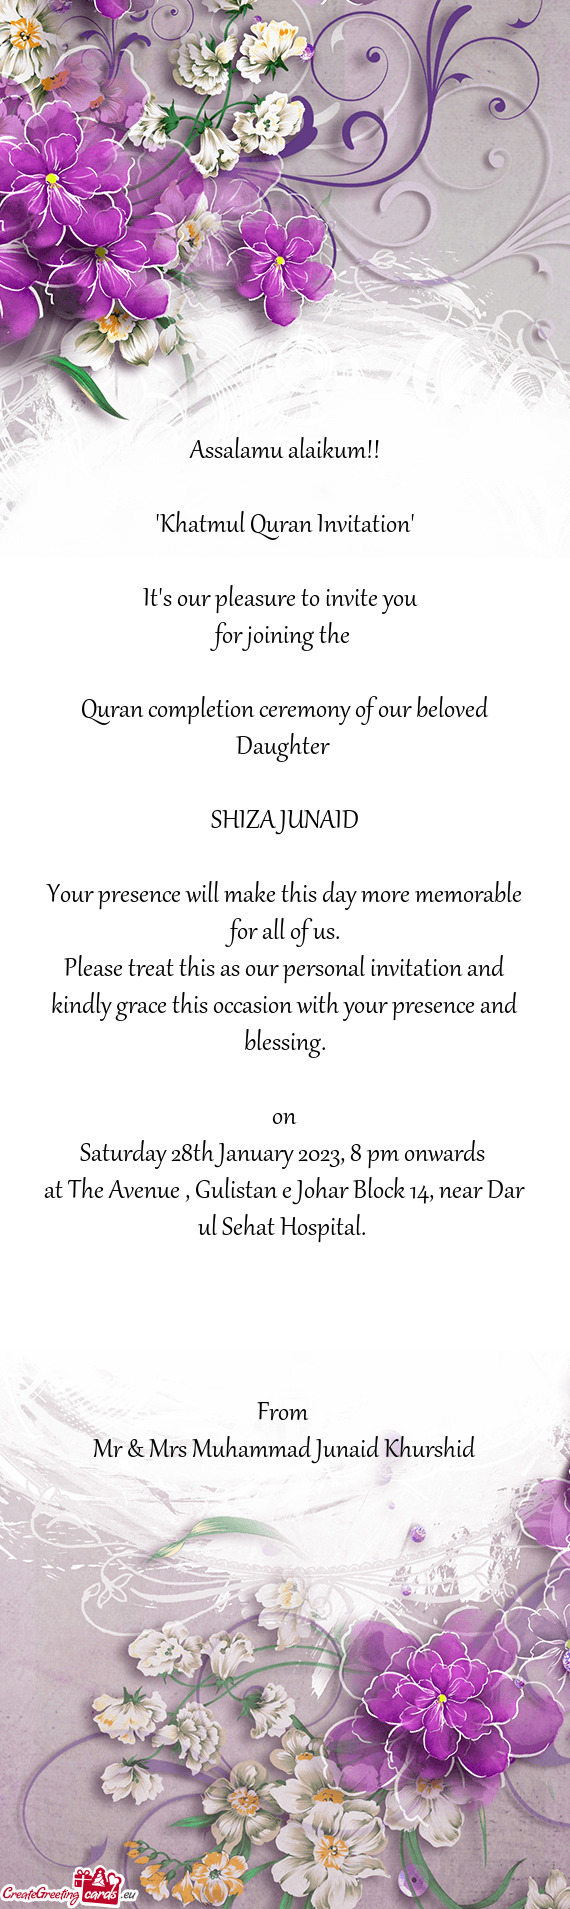 "Khatmul Quran Invitation"